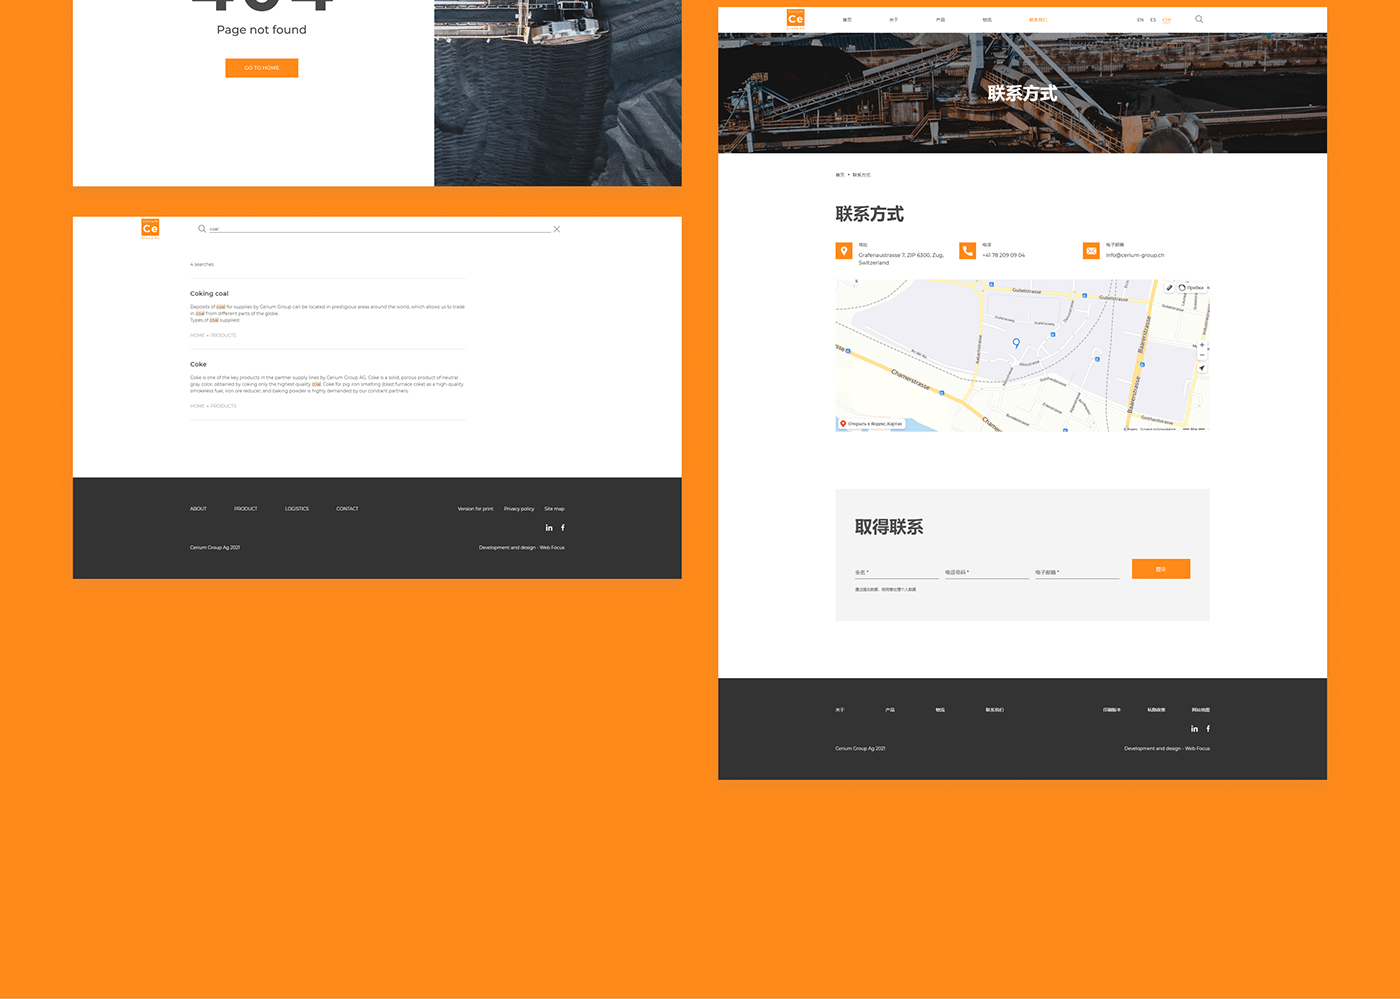 charcoal coal corporate corporate website UI/UX Web Design  Website веб дизайн дизайн сайта Корпоративный сайт